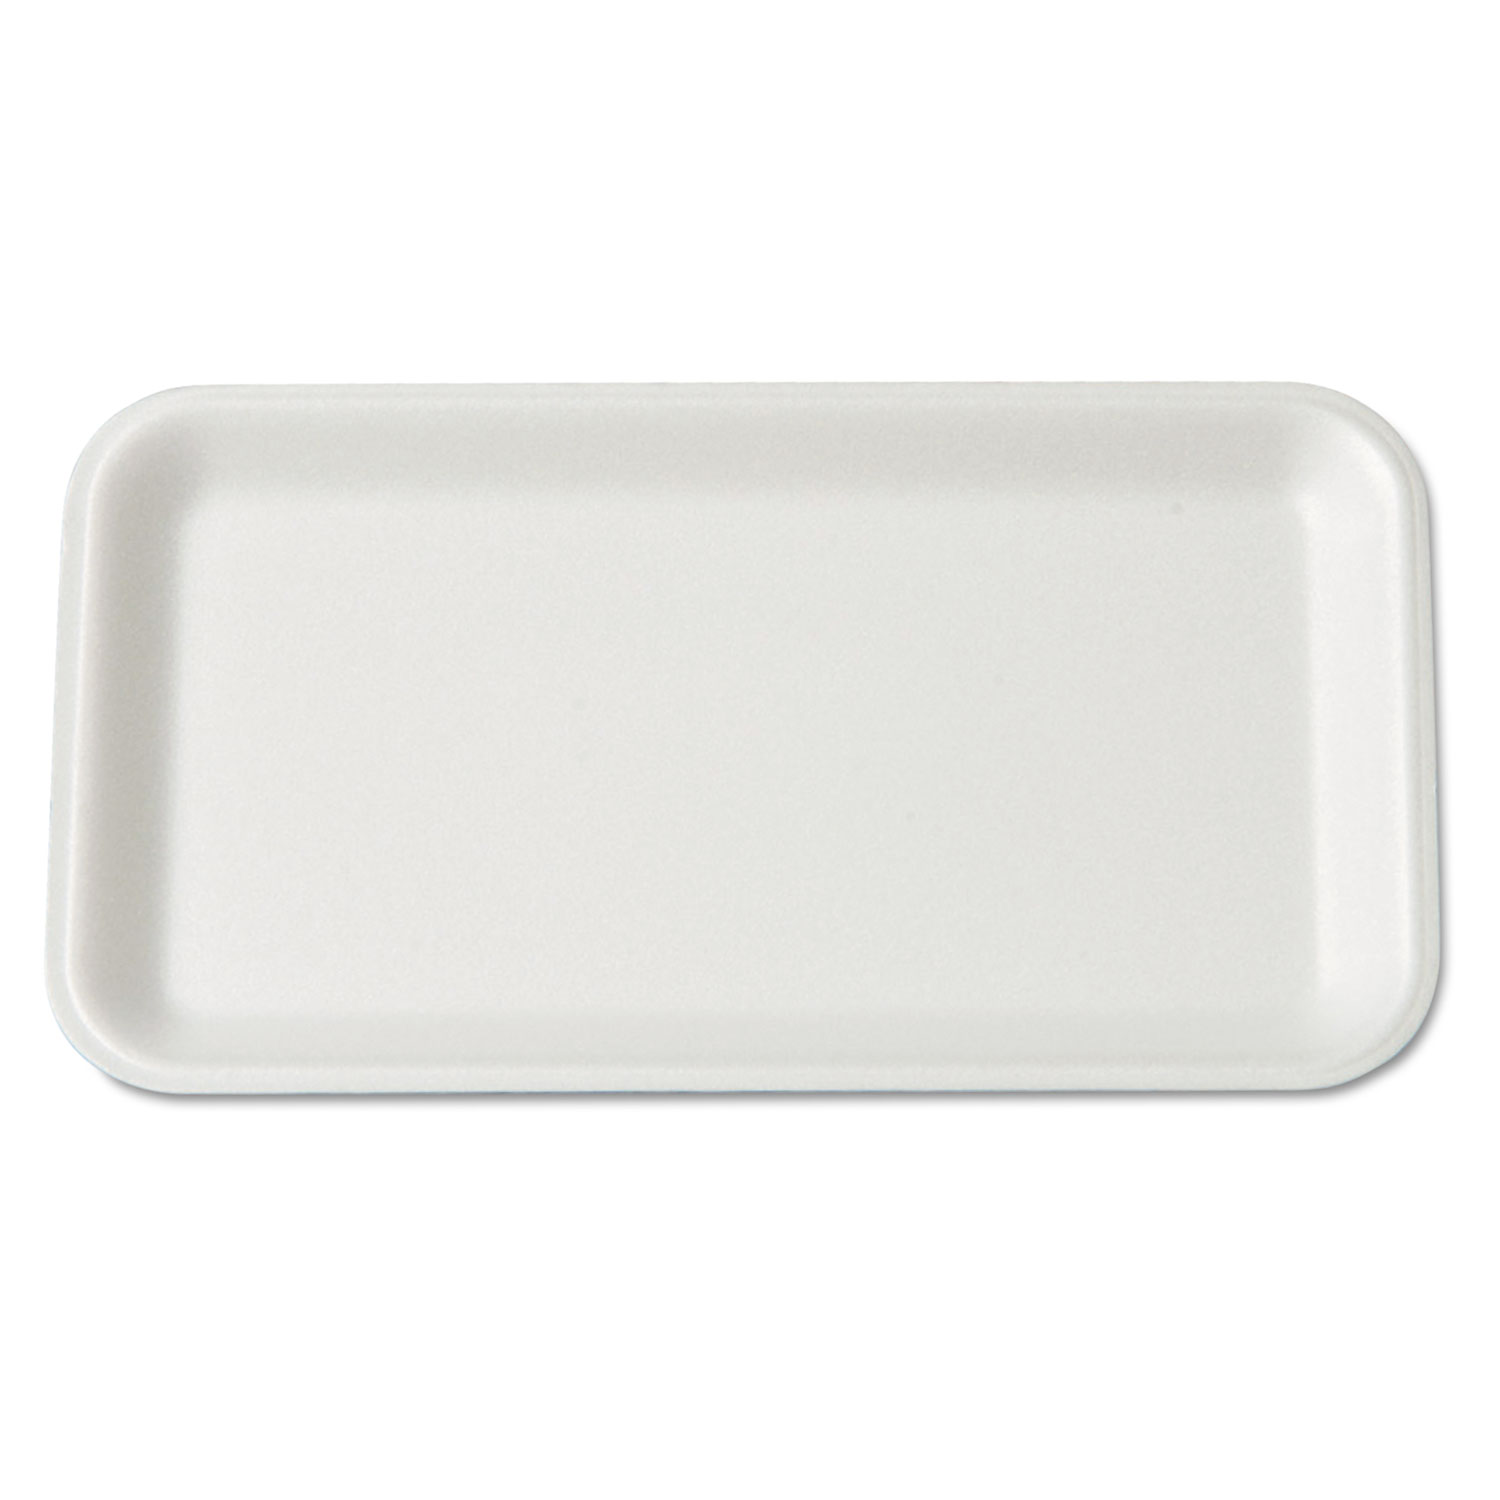 Supermarket Tray, Foam, White, 8-1/4x4-3/4, 125/Bag